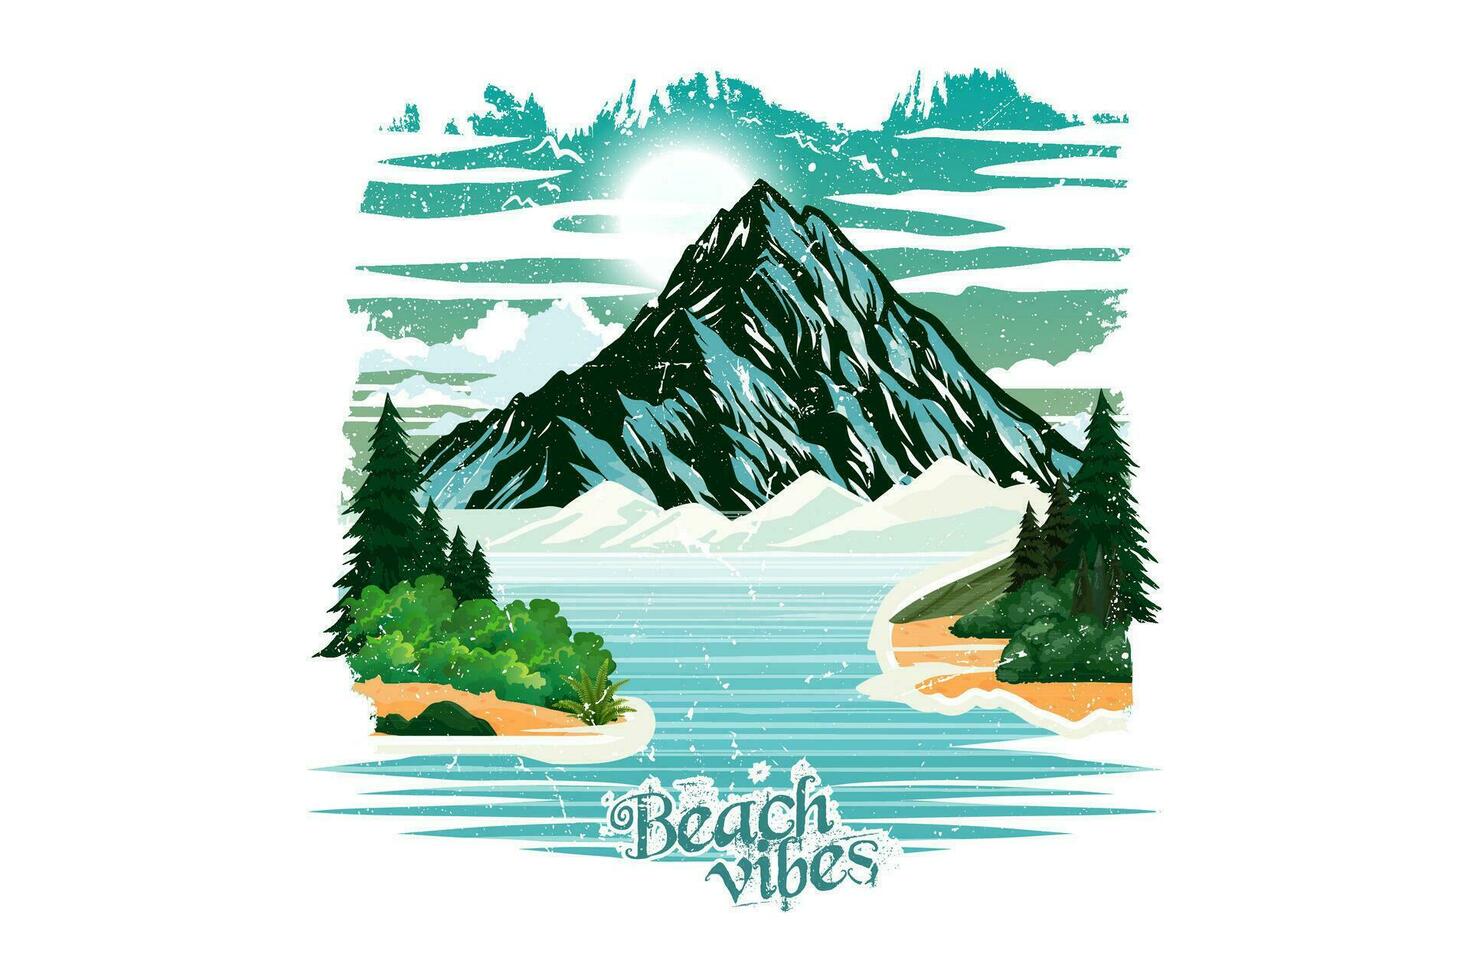 Beach vibes outdoor t shirt print illustration vector